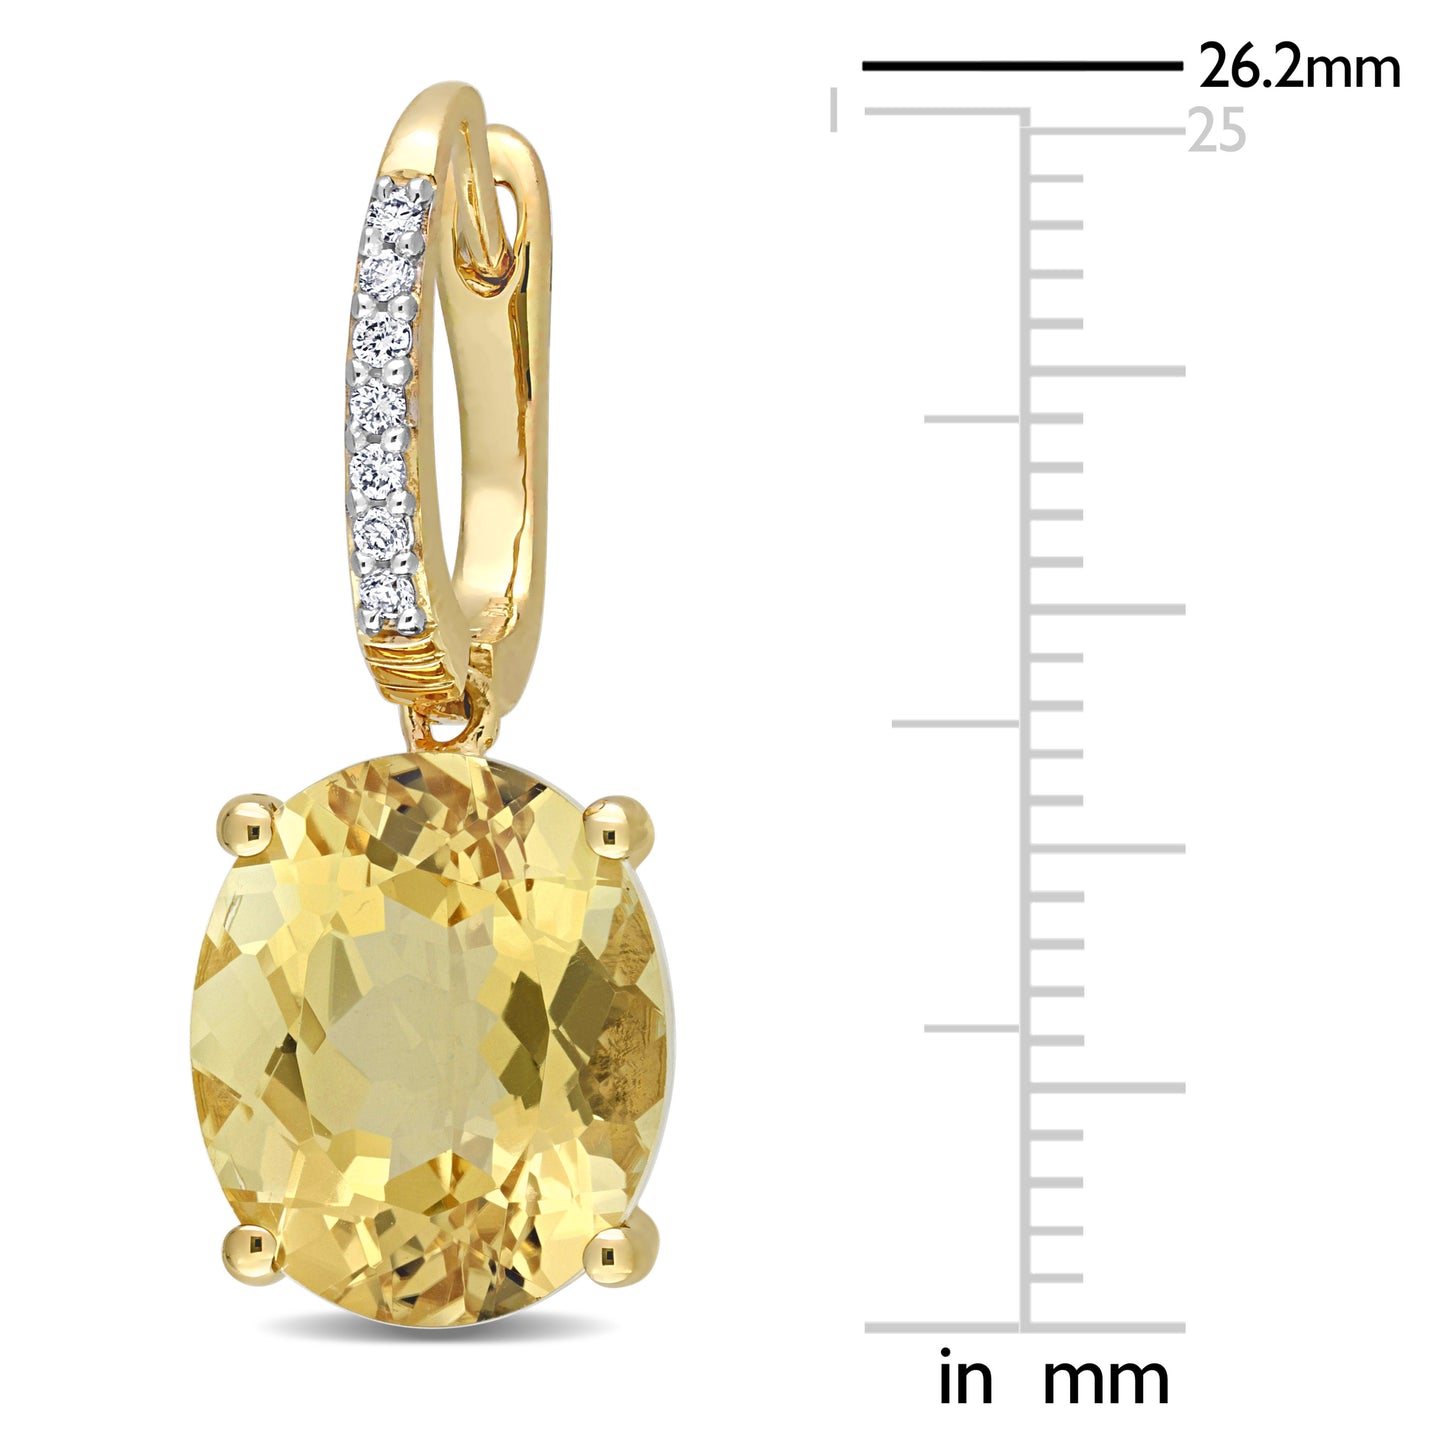 Citrine & Diamond Earrings in 14k Yellow Gold